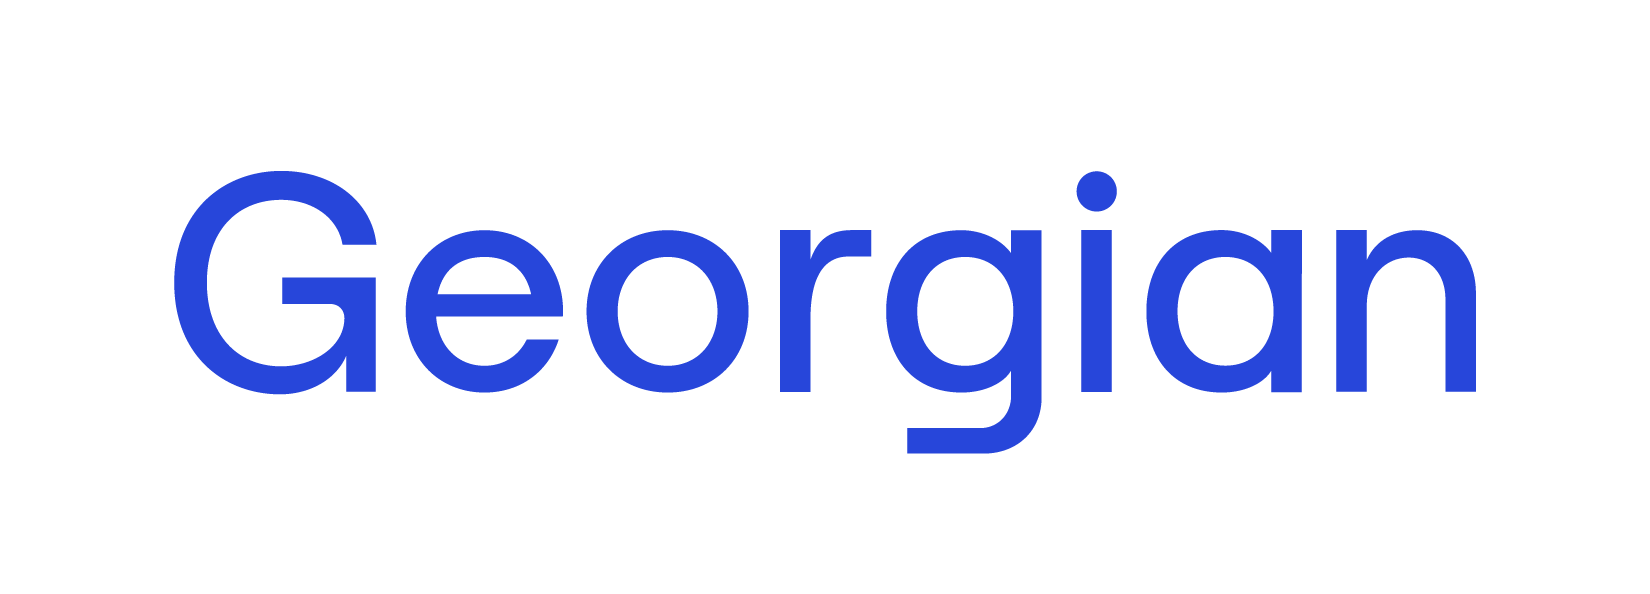 georgian-logo.png